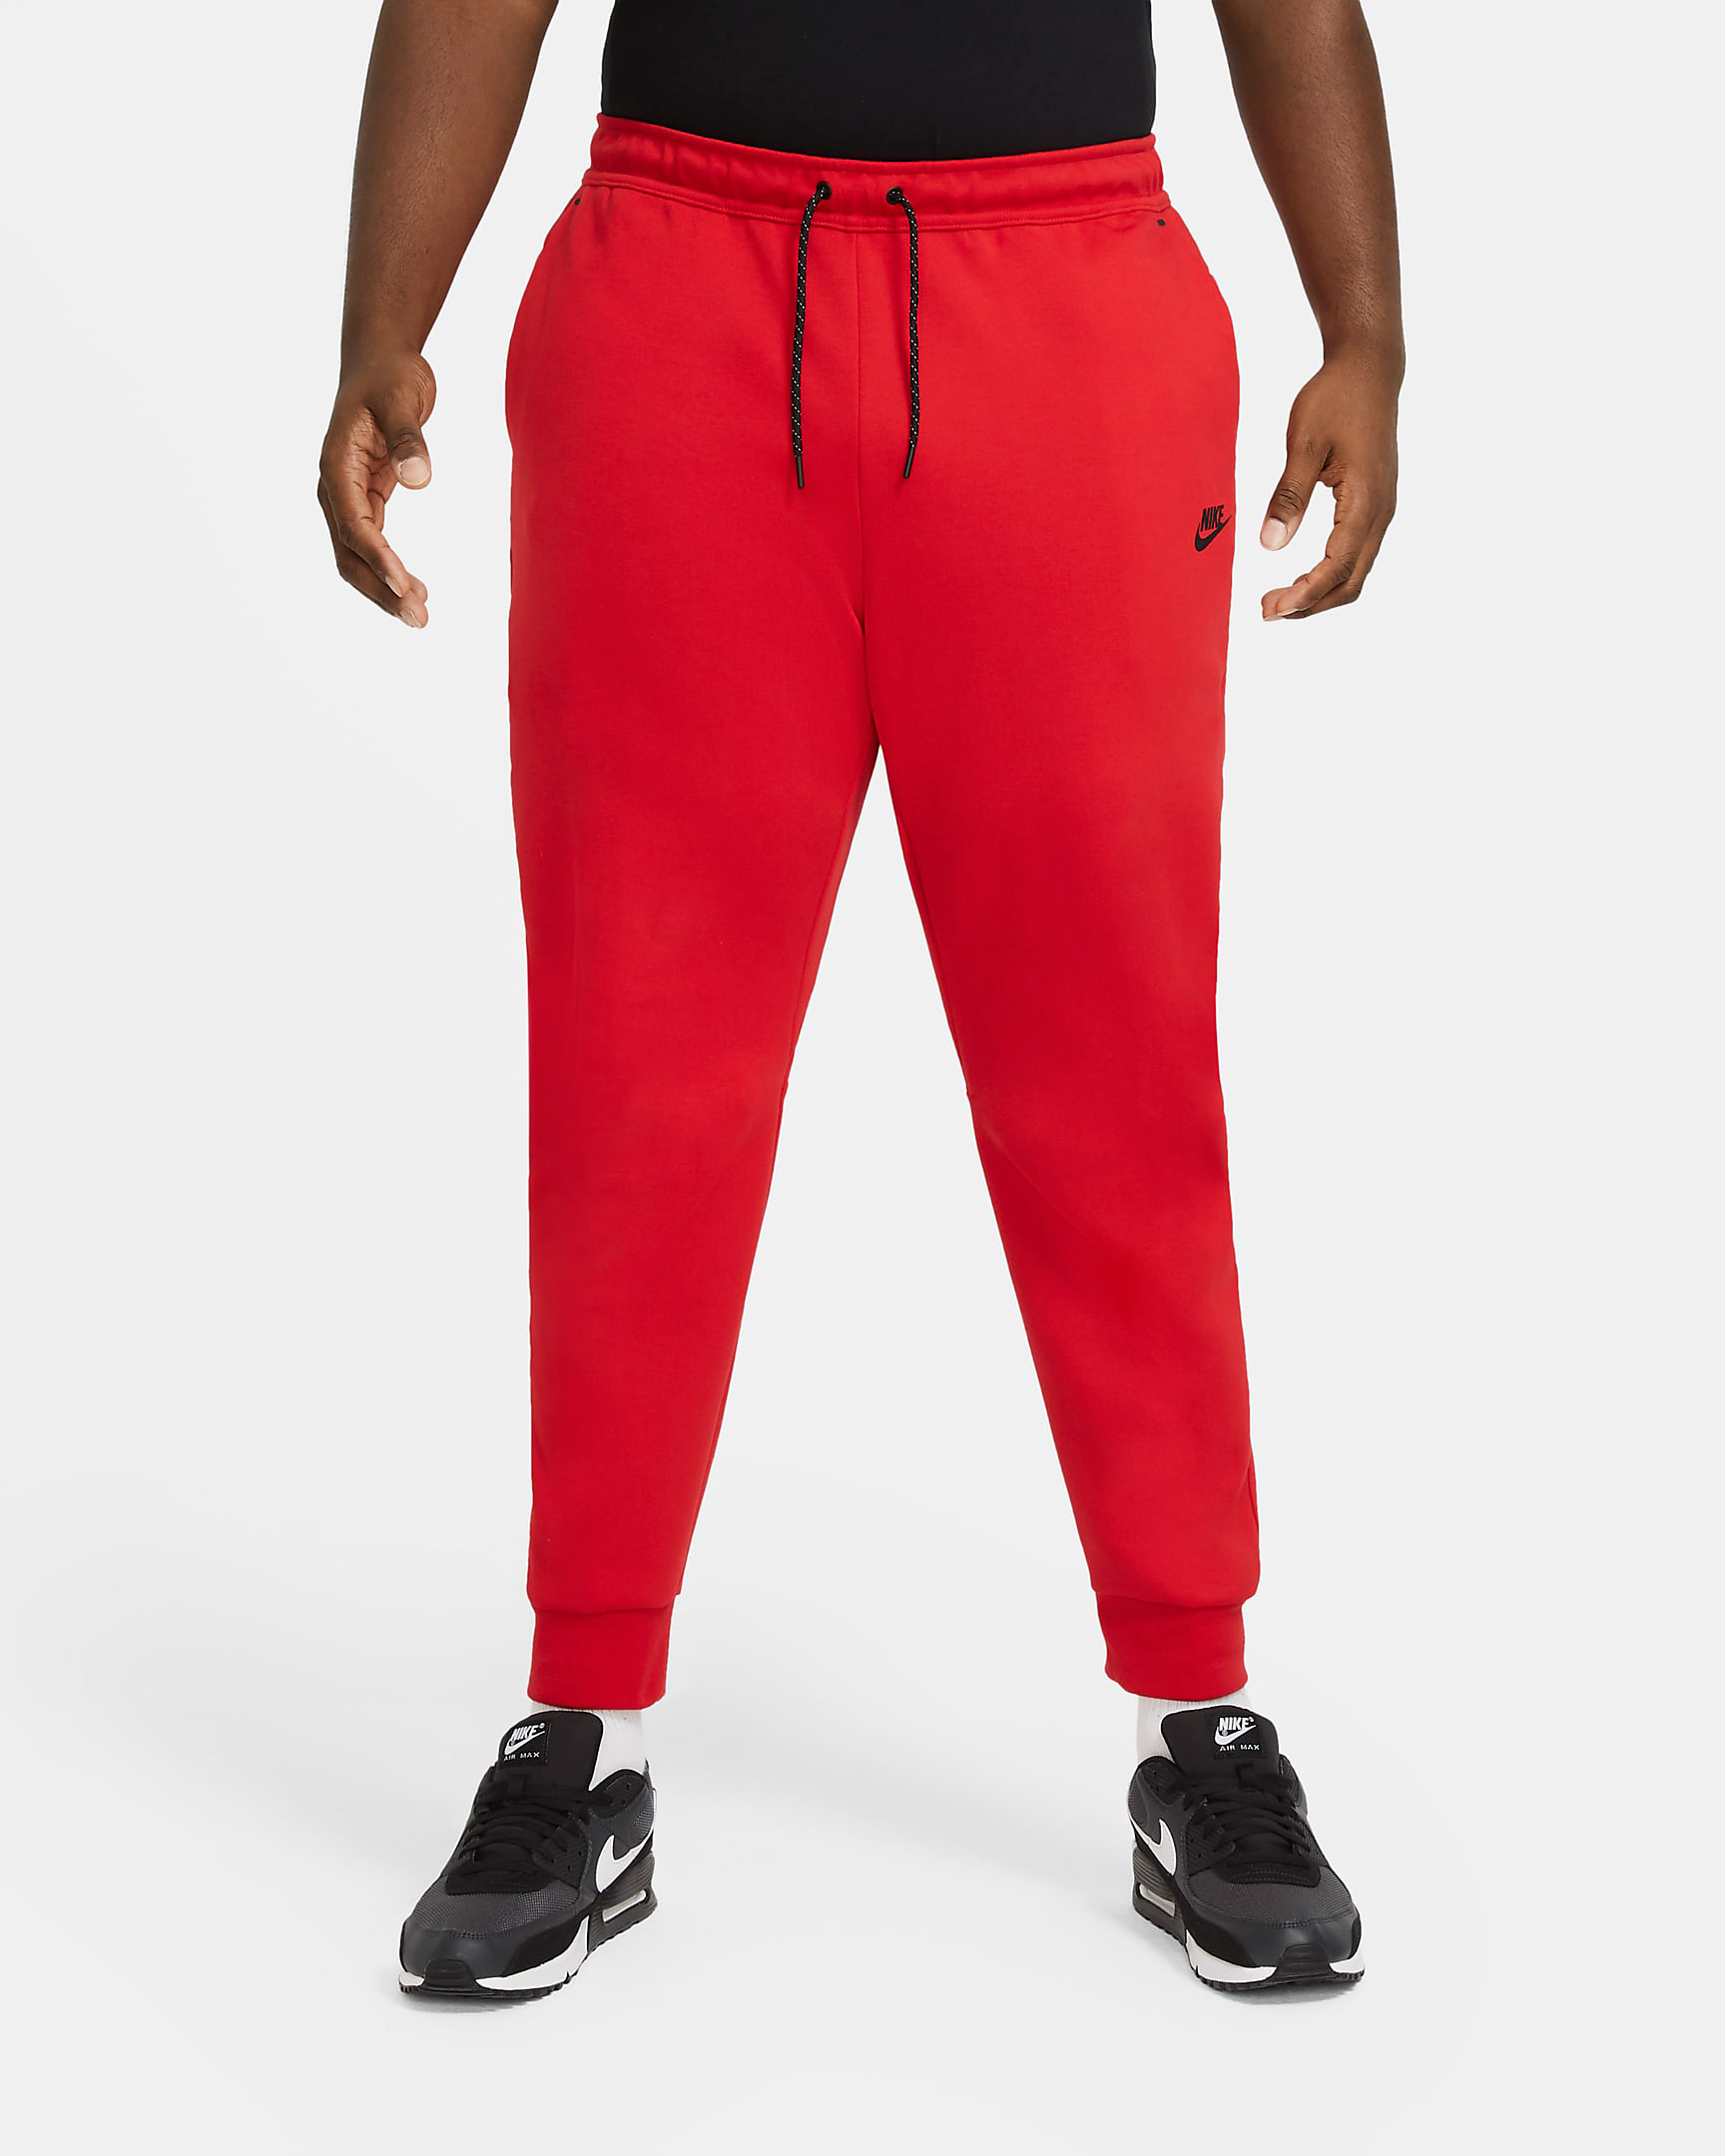 Air Jordan 1 Patent Bred x Nike Tech Fleece Hoodie and Pants